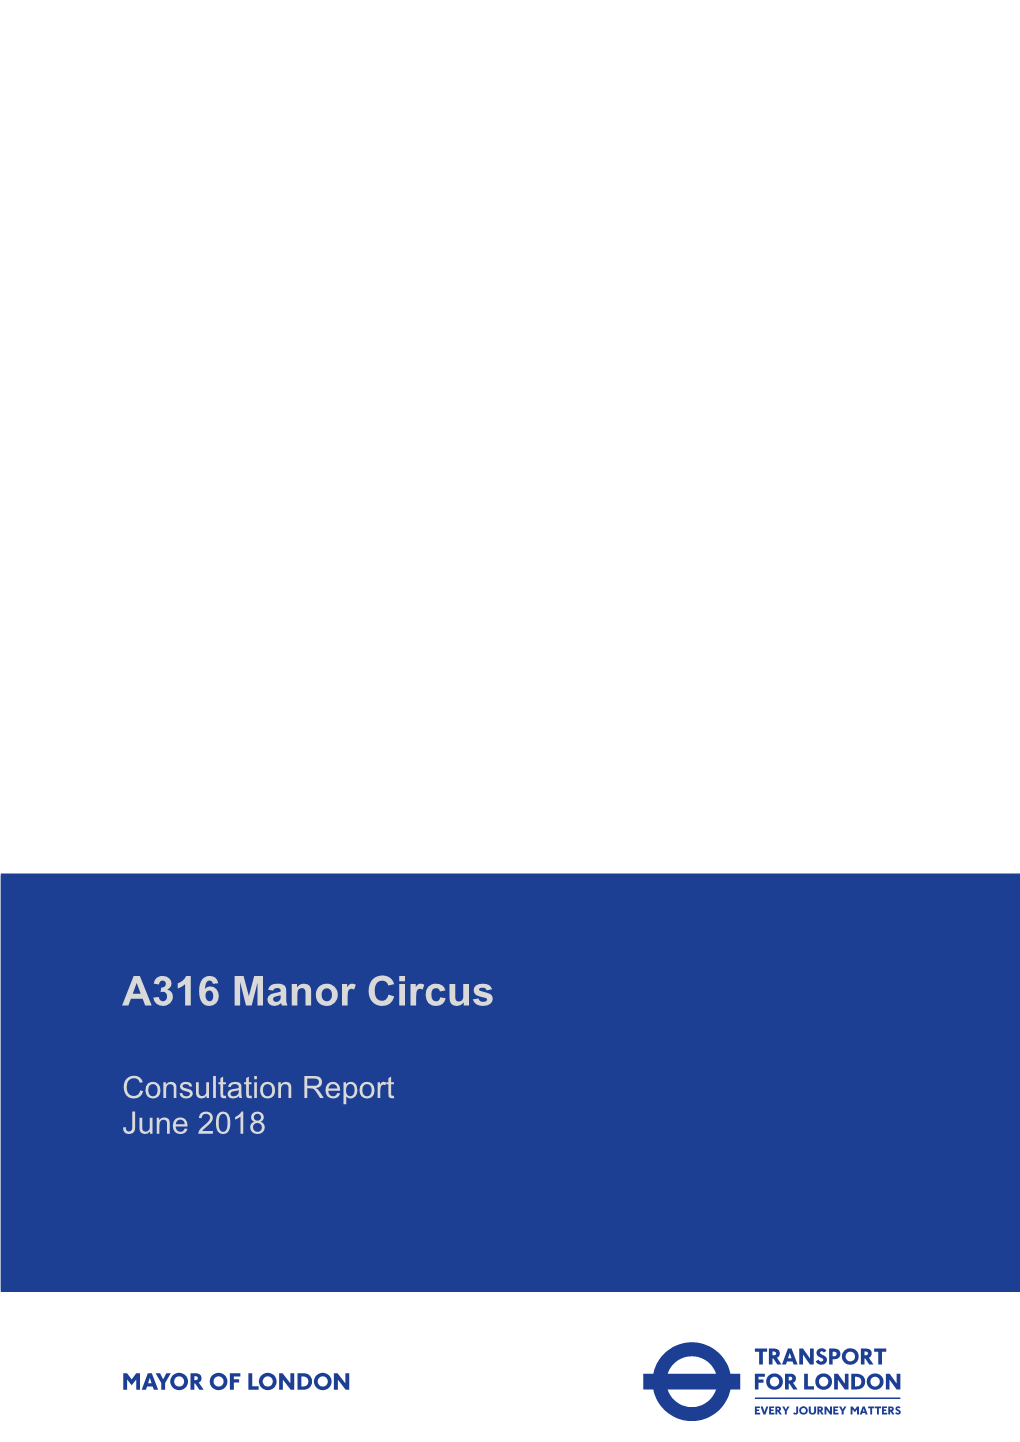 A316 Manor Circus Consultation Report